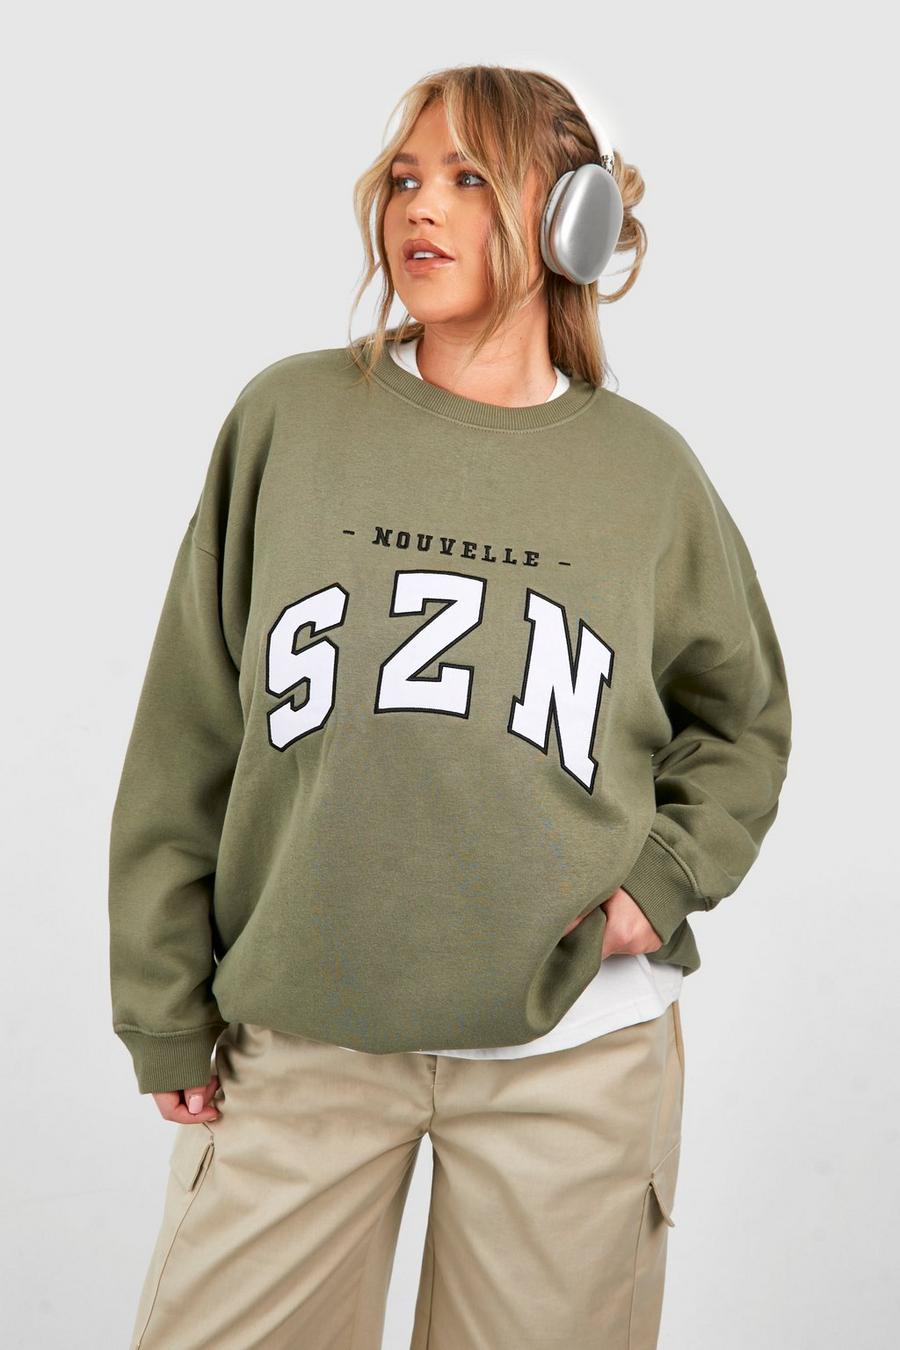 Plus Szn Applique Oversized Sweatshirt image number 1